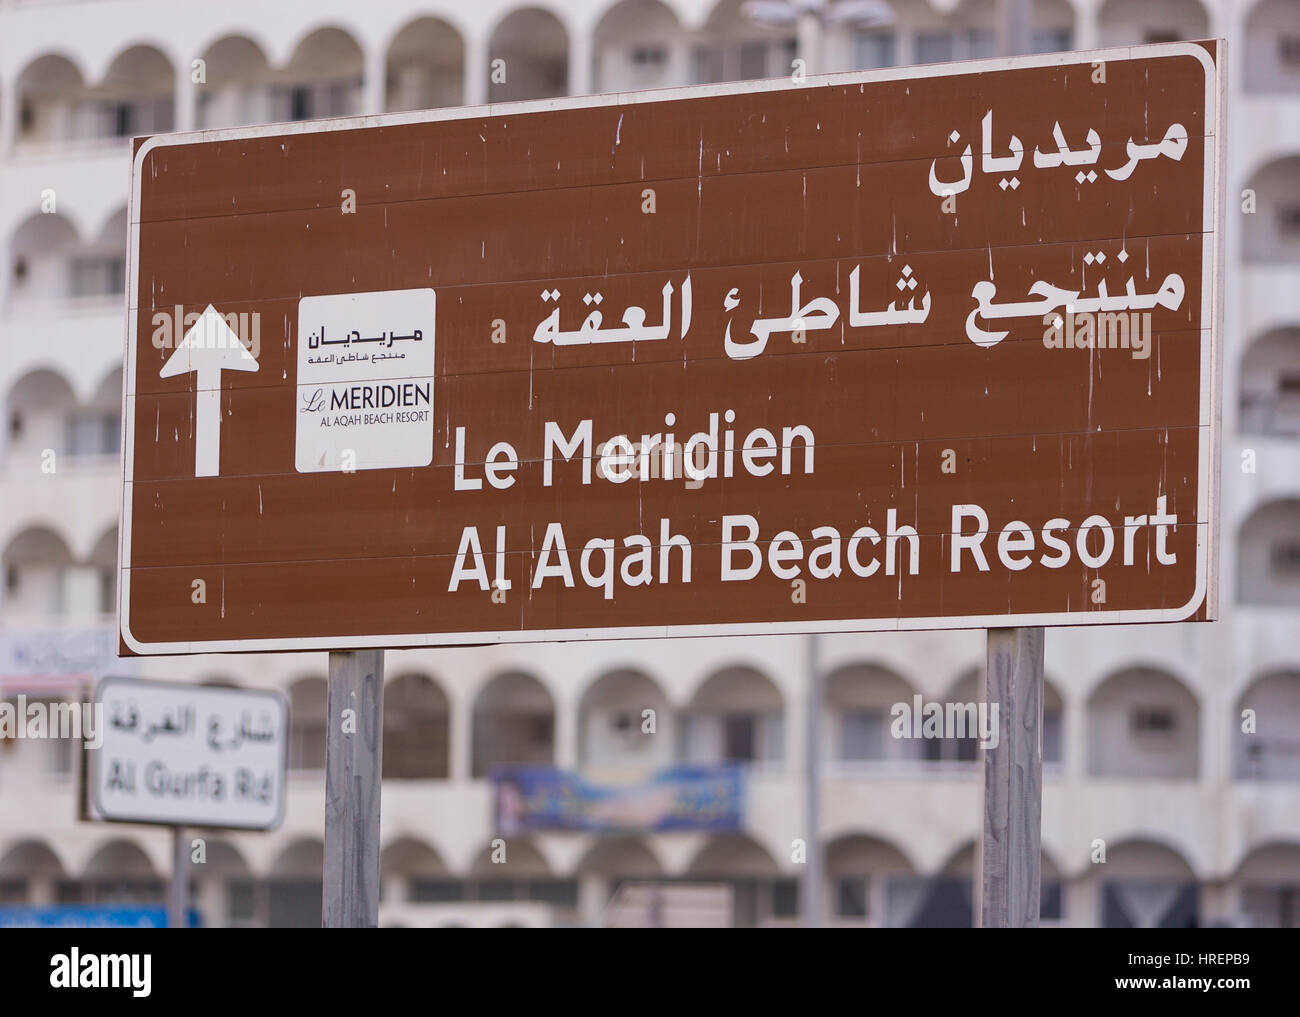 FUJAIRAH, EMIRATI ARABI UNITI - strada bilingue segno per la Meridien e Al Aqah Beach Resort. Foto Stock